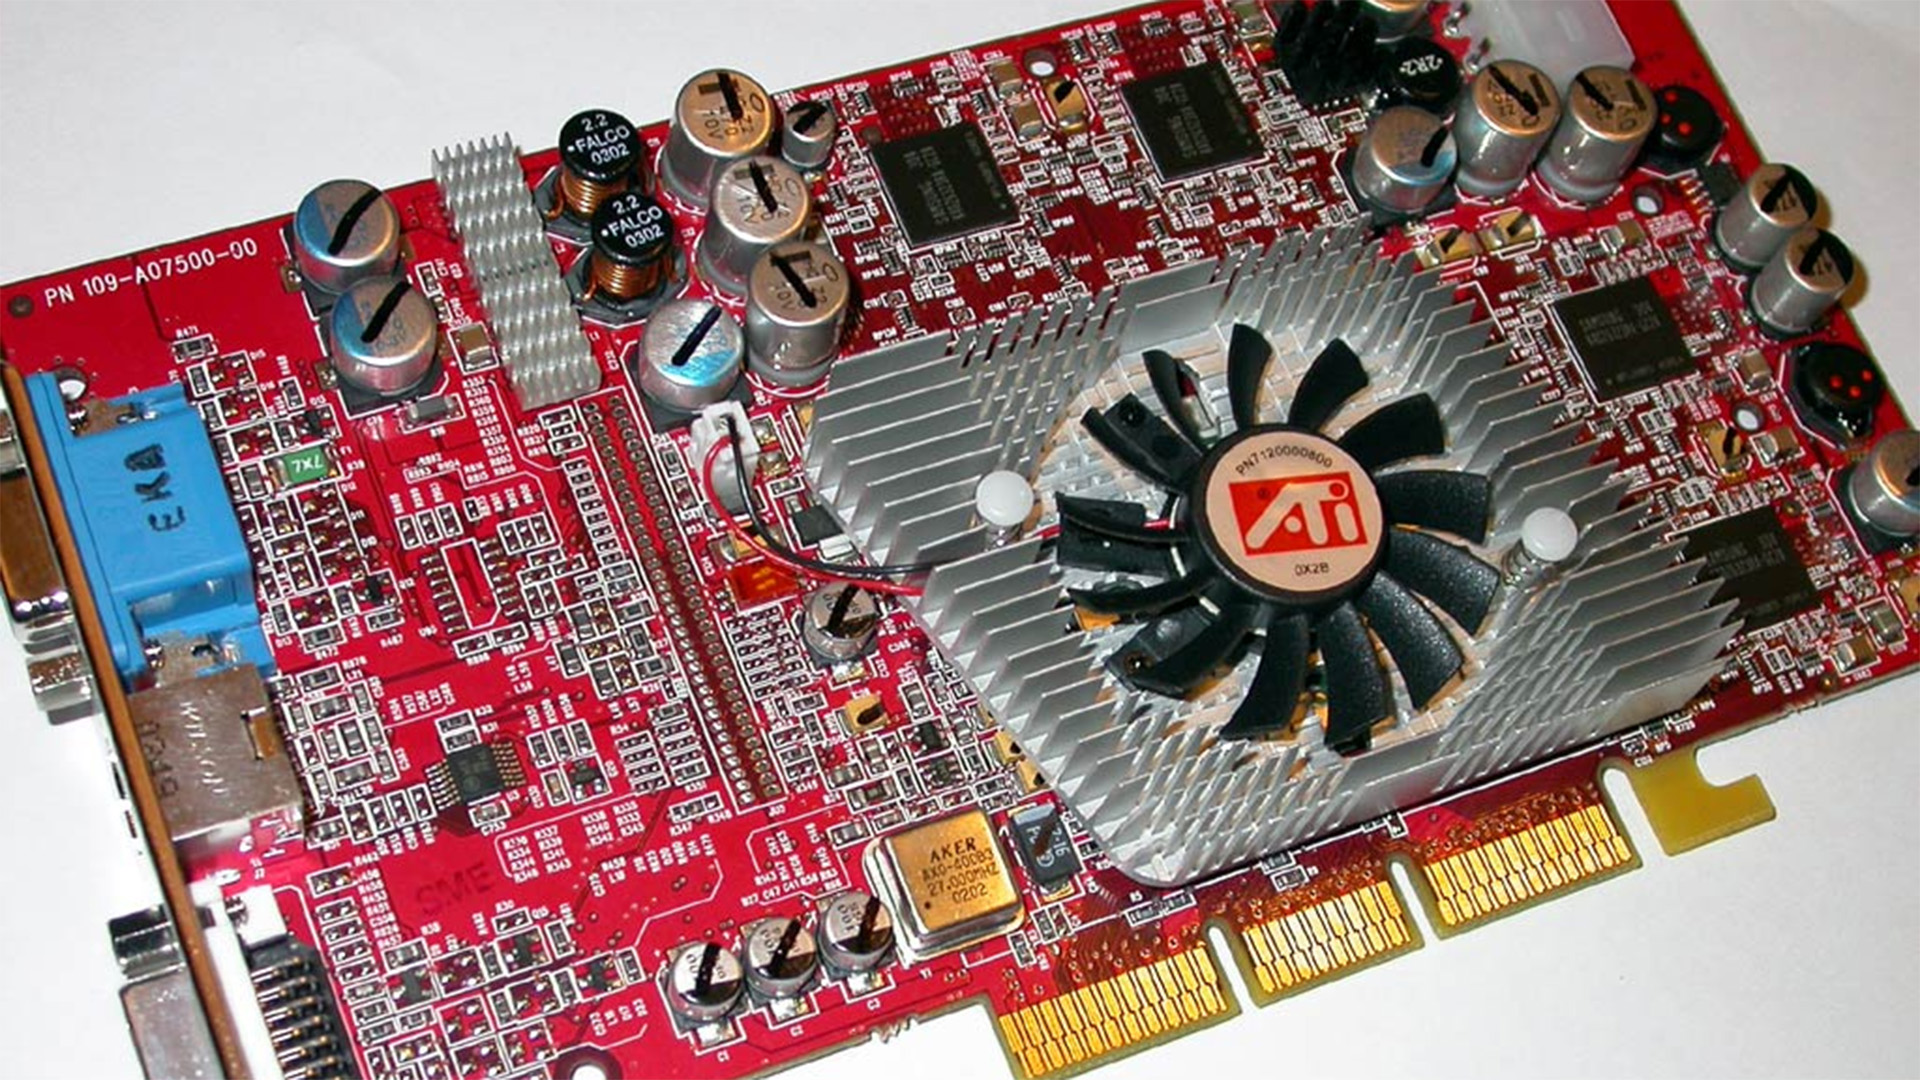 An AMD Radeon 9800 Pro graphics card.